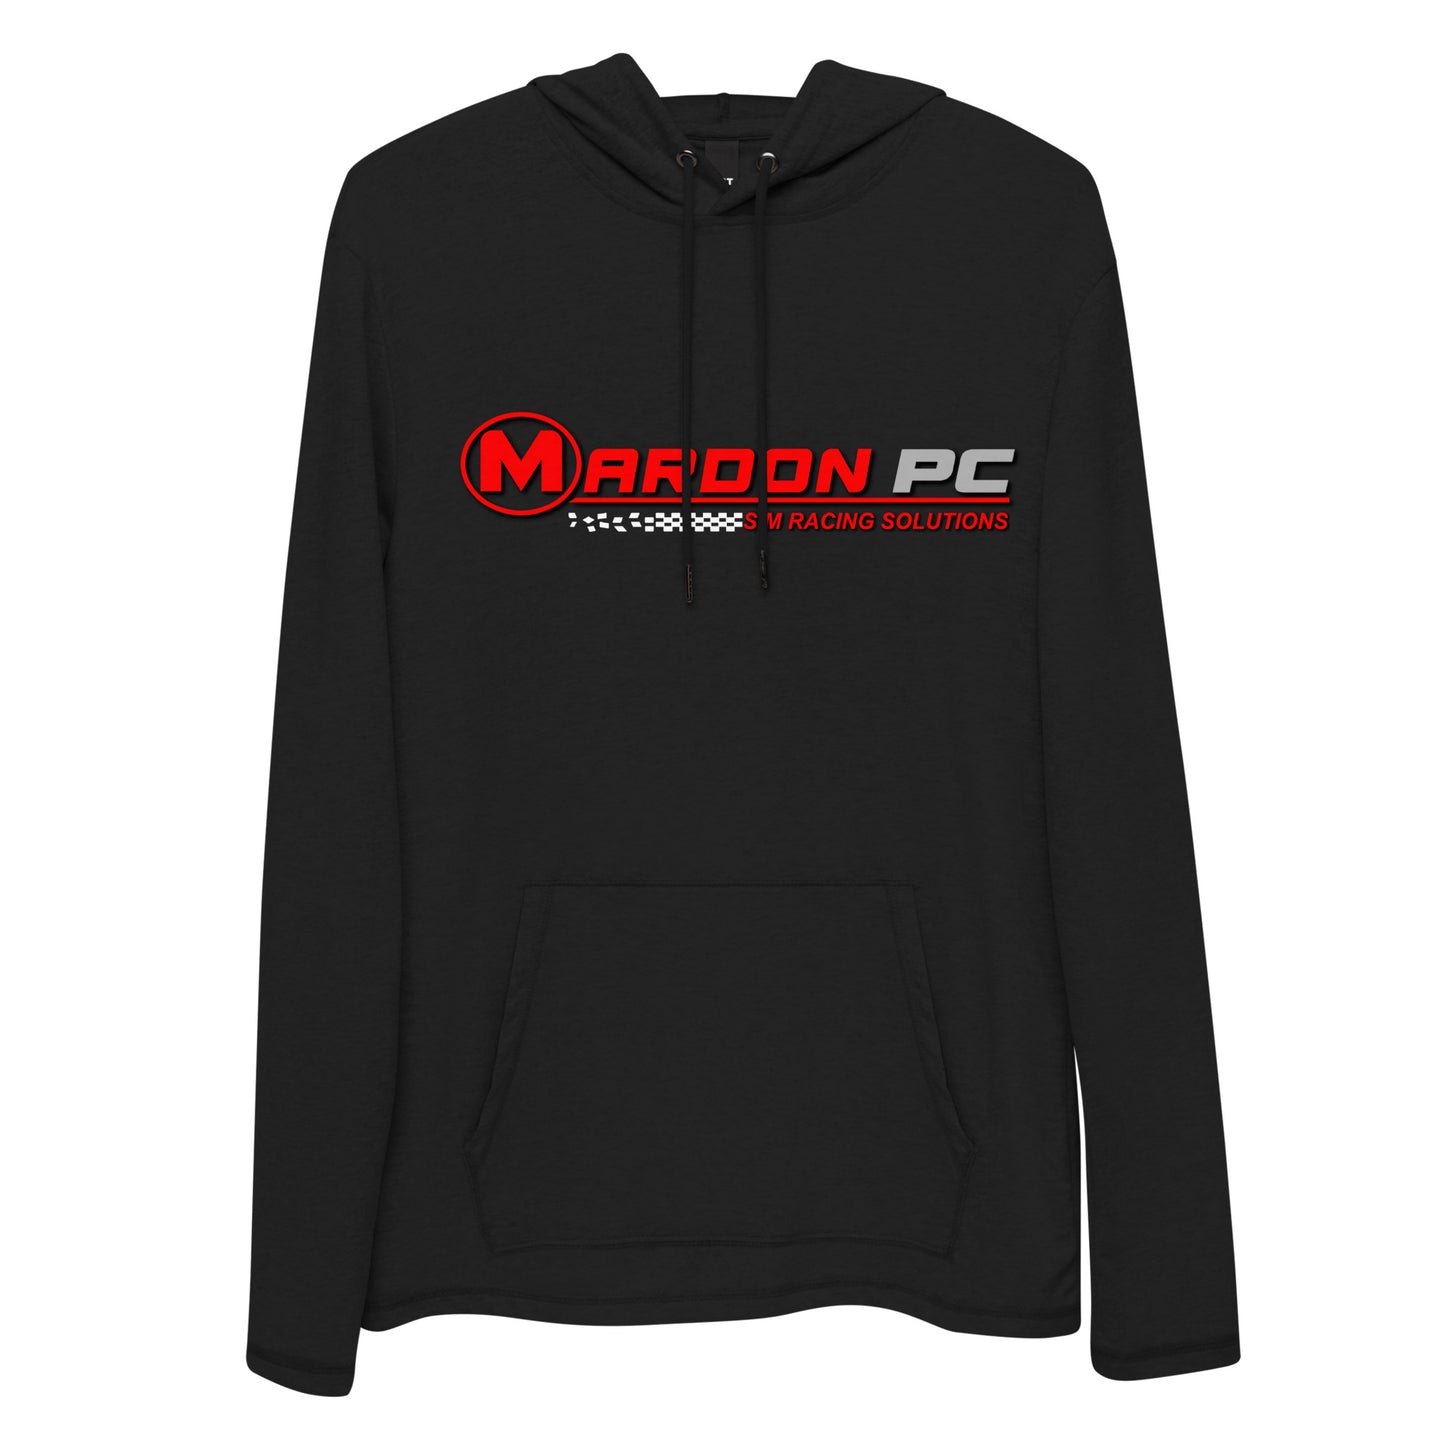 MARDON/TCSP/MOZA Unisex Lightweight Hoodie